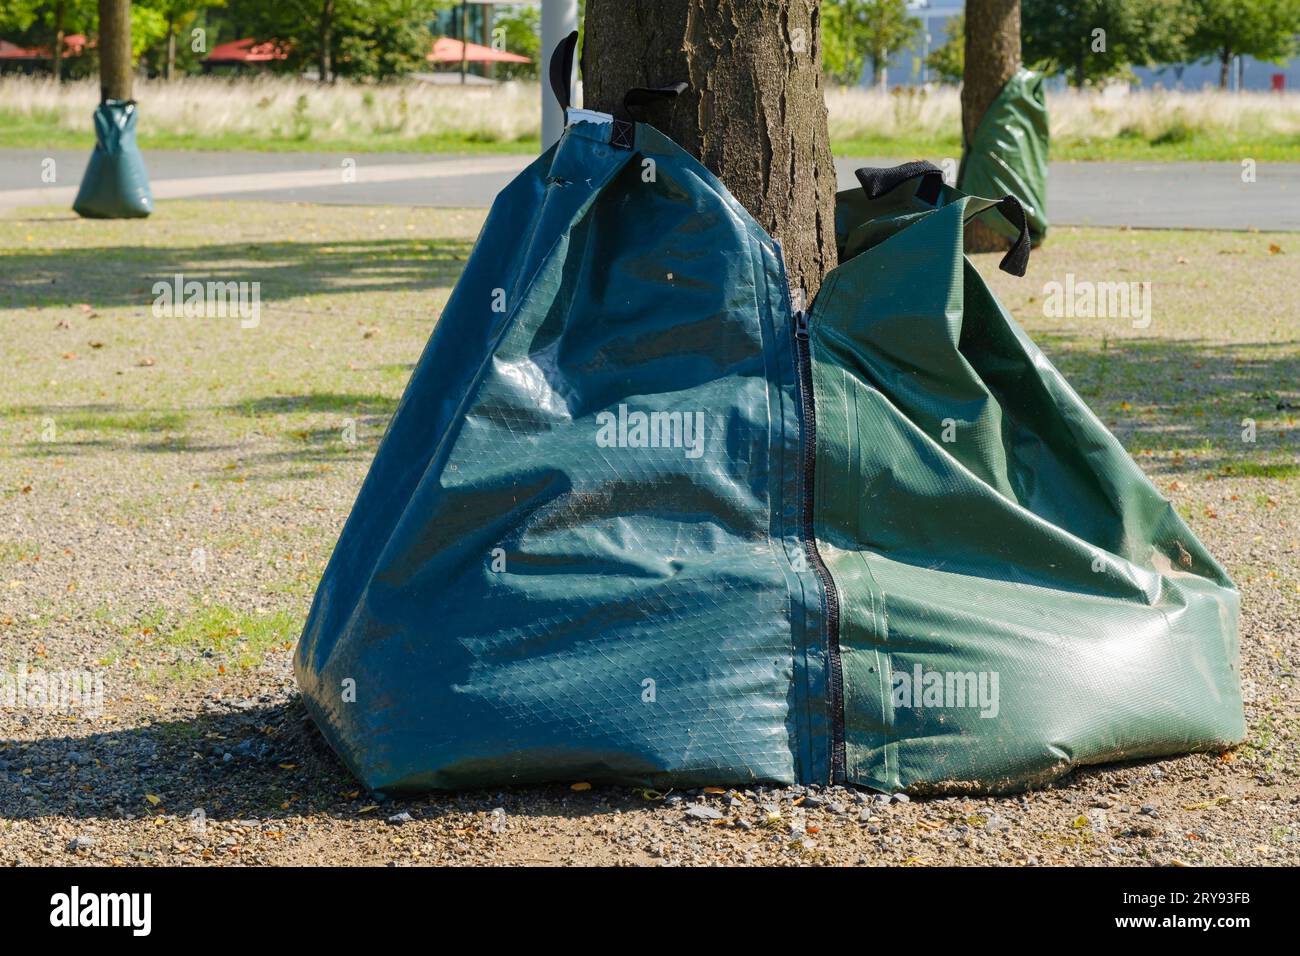 Irrigation bags on the tree, Ruhr tech kampus Essen, Essen, Ruhr area, North Rhine-Westphalia, Germany Stock Photo